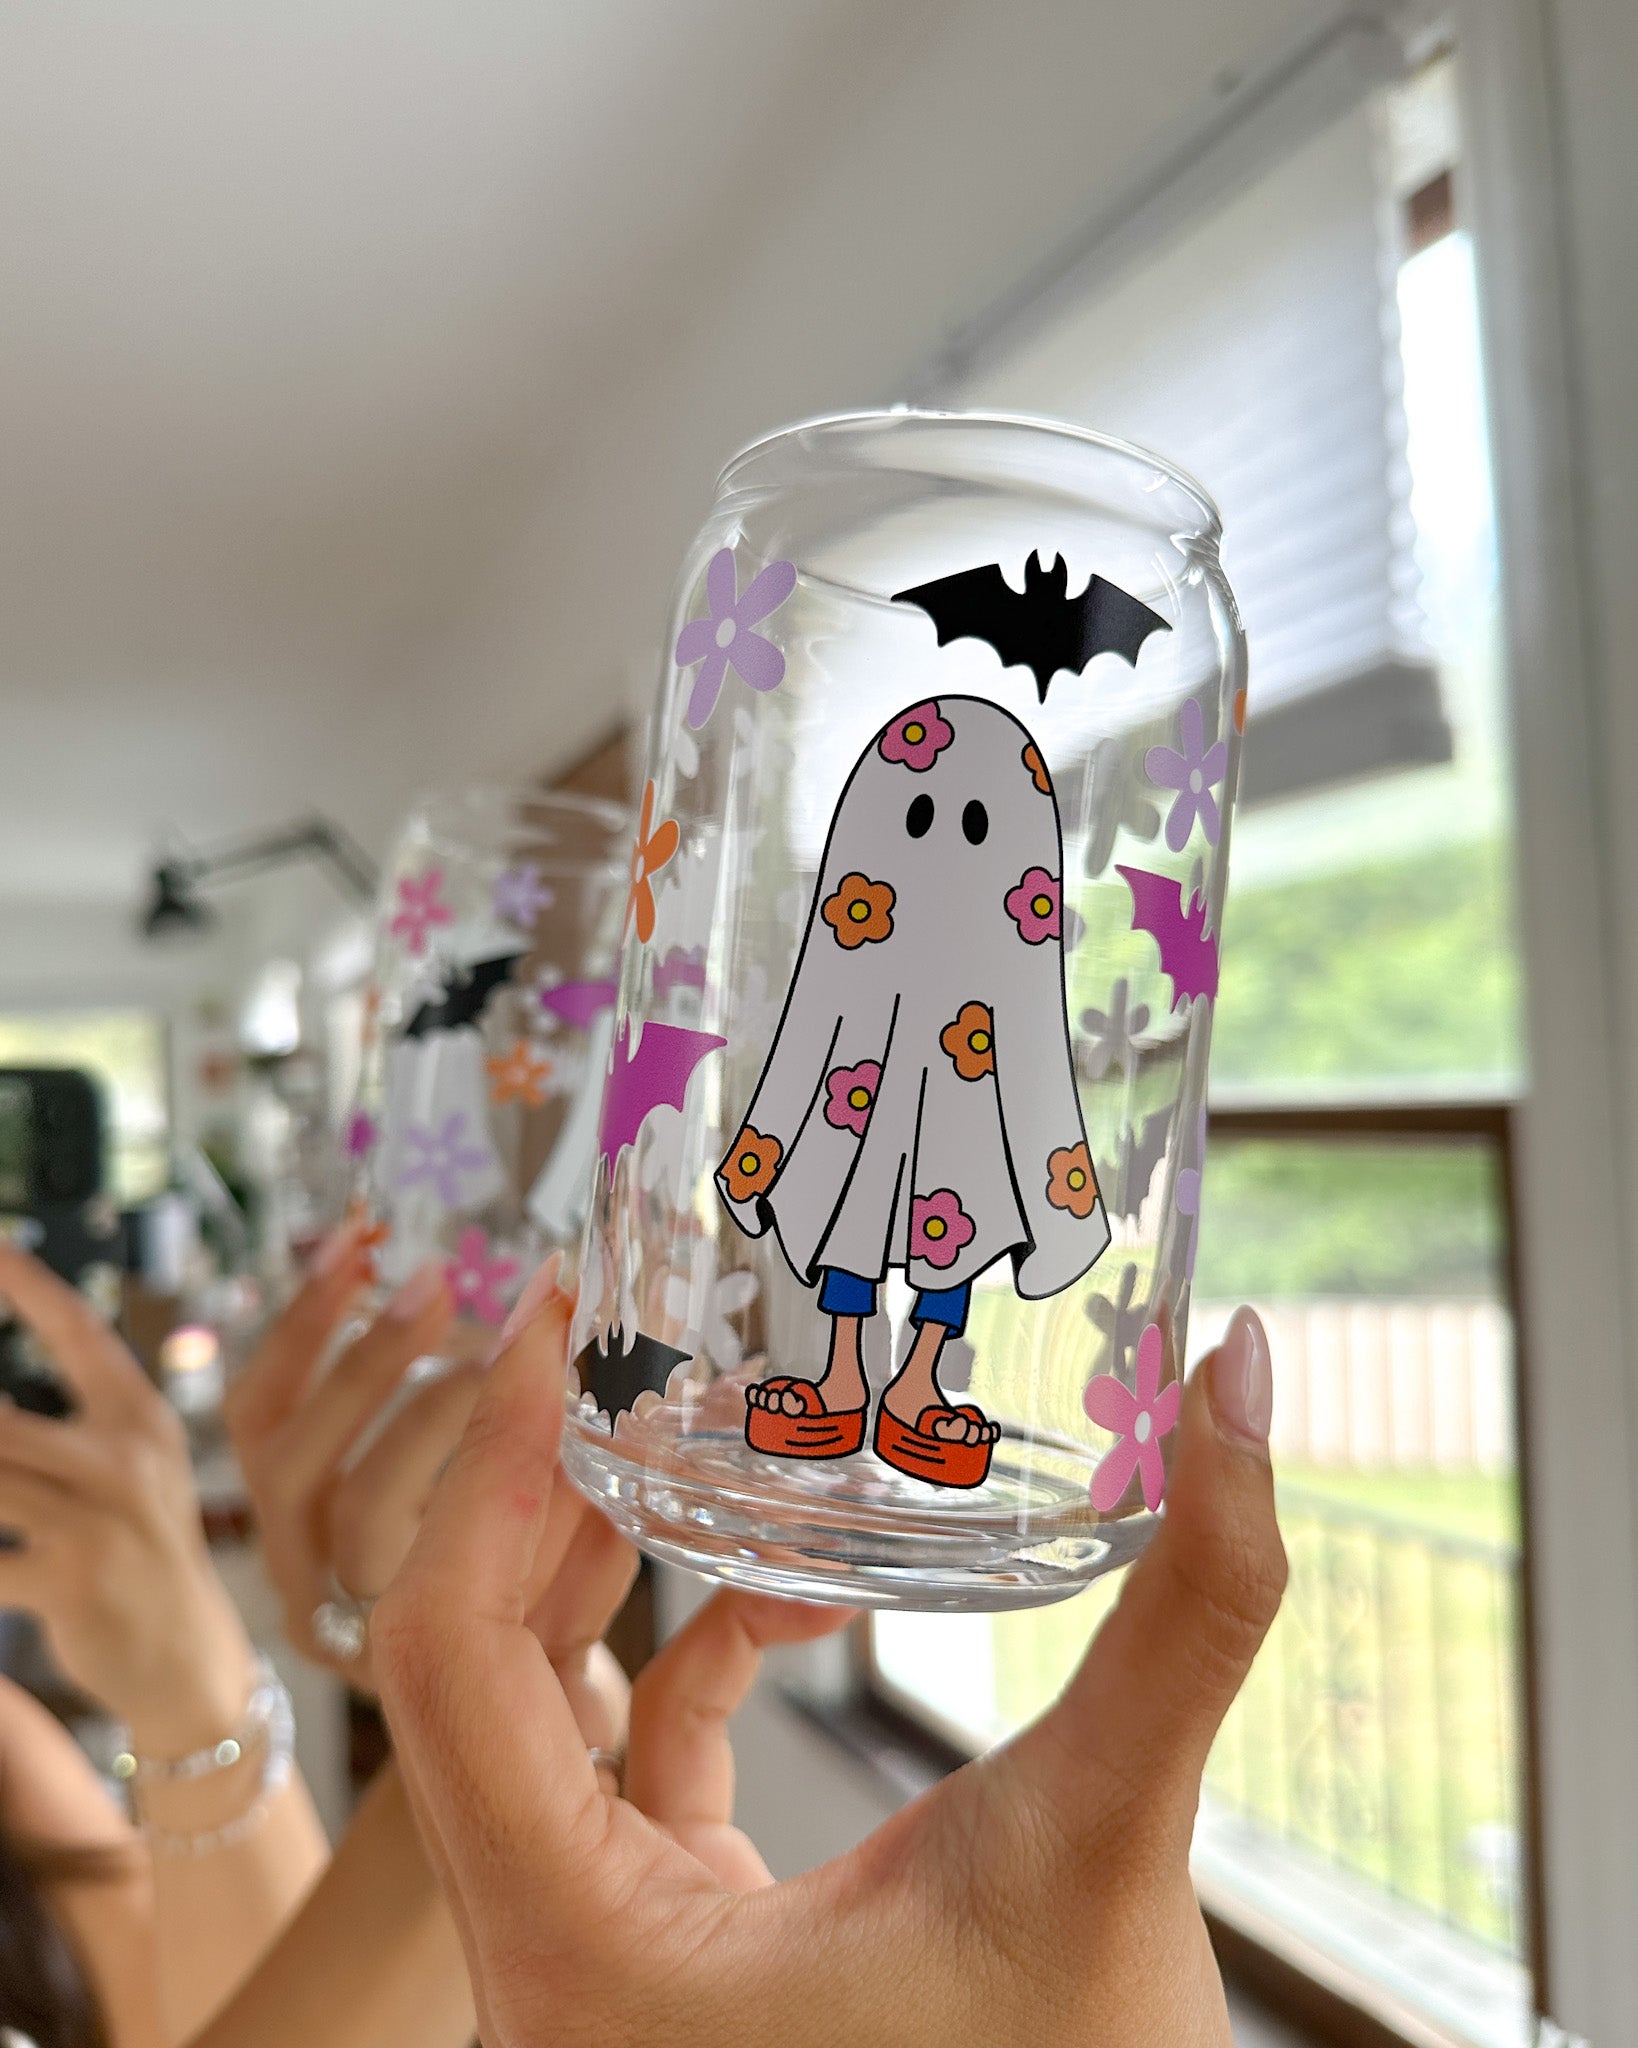 2 glass ghost tumbler wine glass,glass ghosts Inside Halloween fall SO CUTE